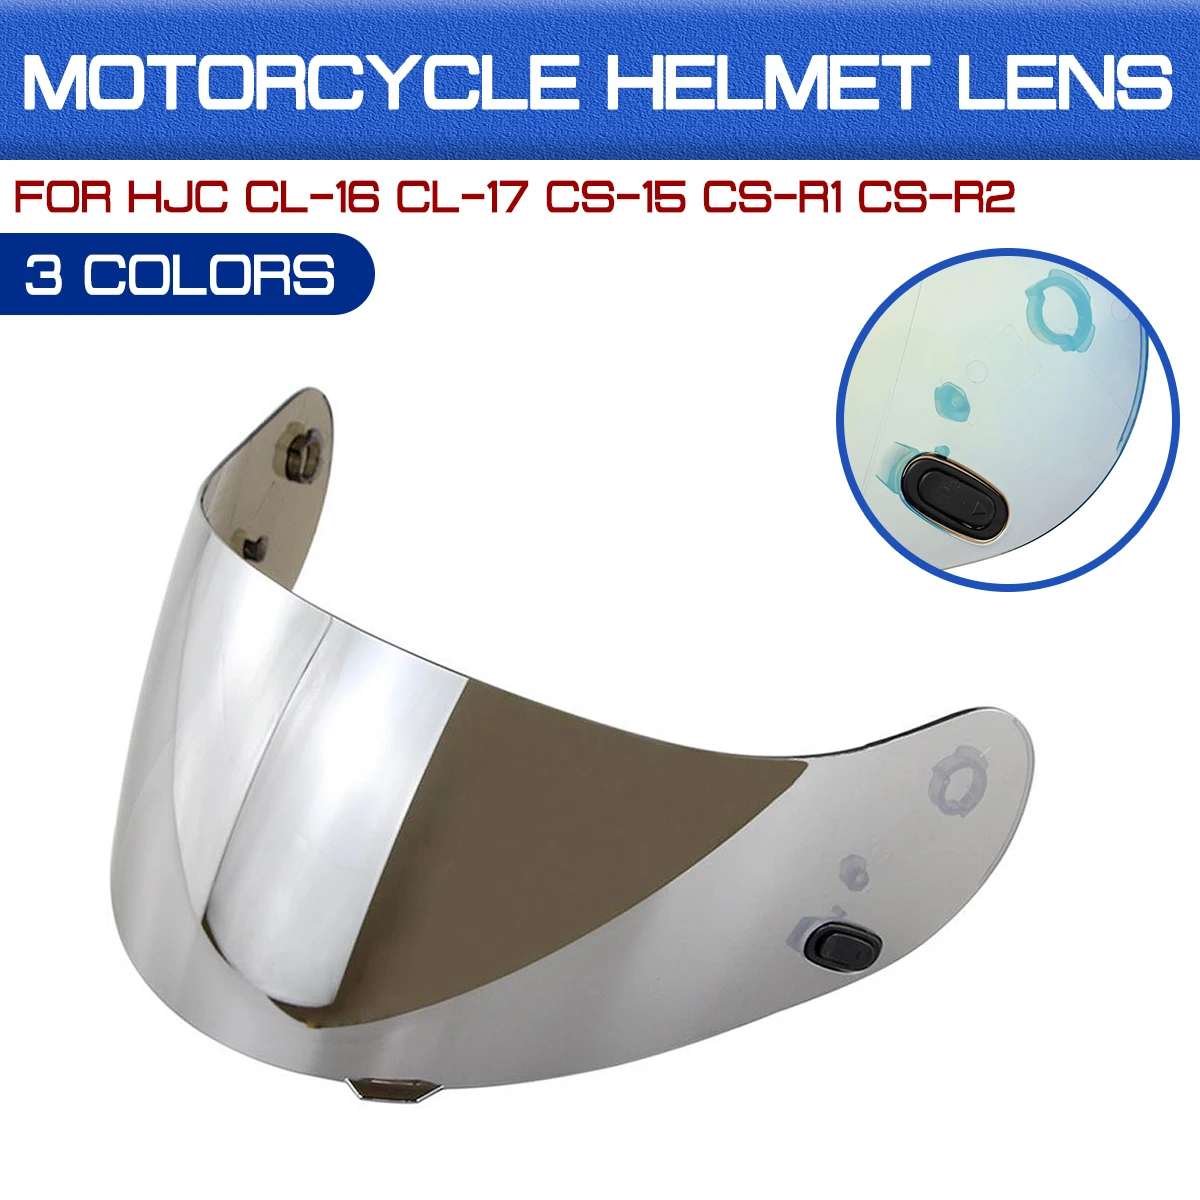 

Motorcycle Helmet visor Shield Parts original glasses motorbike Lens For HJC CL-16 CL-17 CS-15 CS-R1 CS-R2 CS-15 FG-15 TR-1